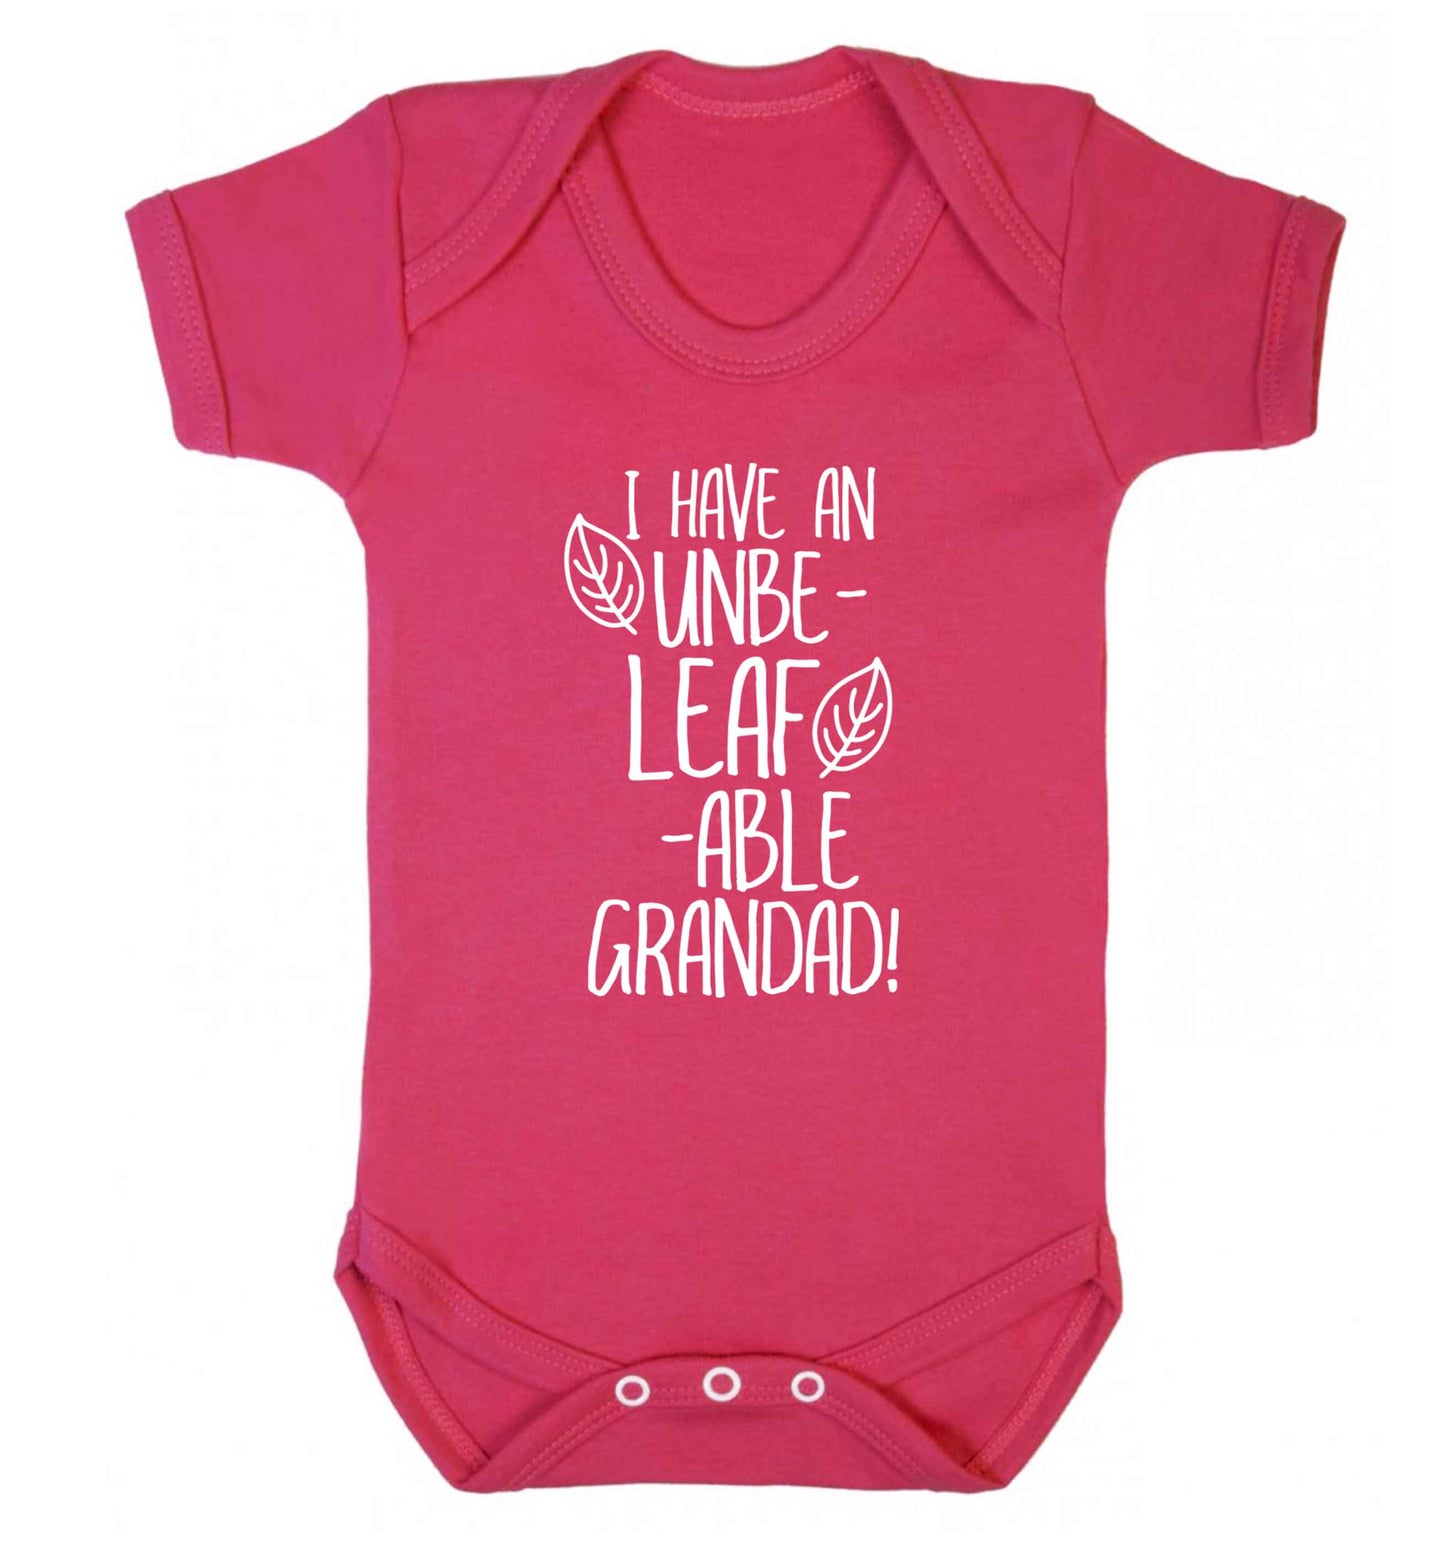 I have an unbe-leaf-able grandad Baby Vest dark pink 18-24 months